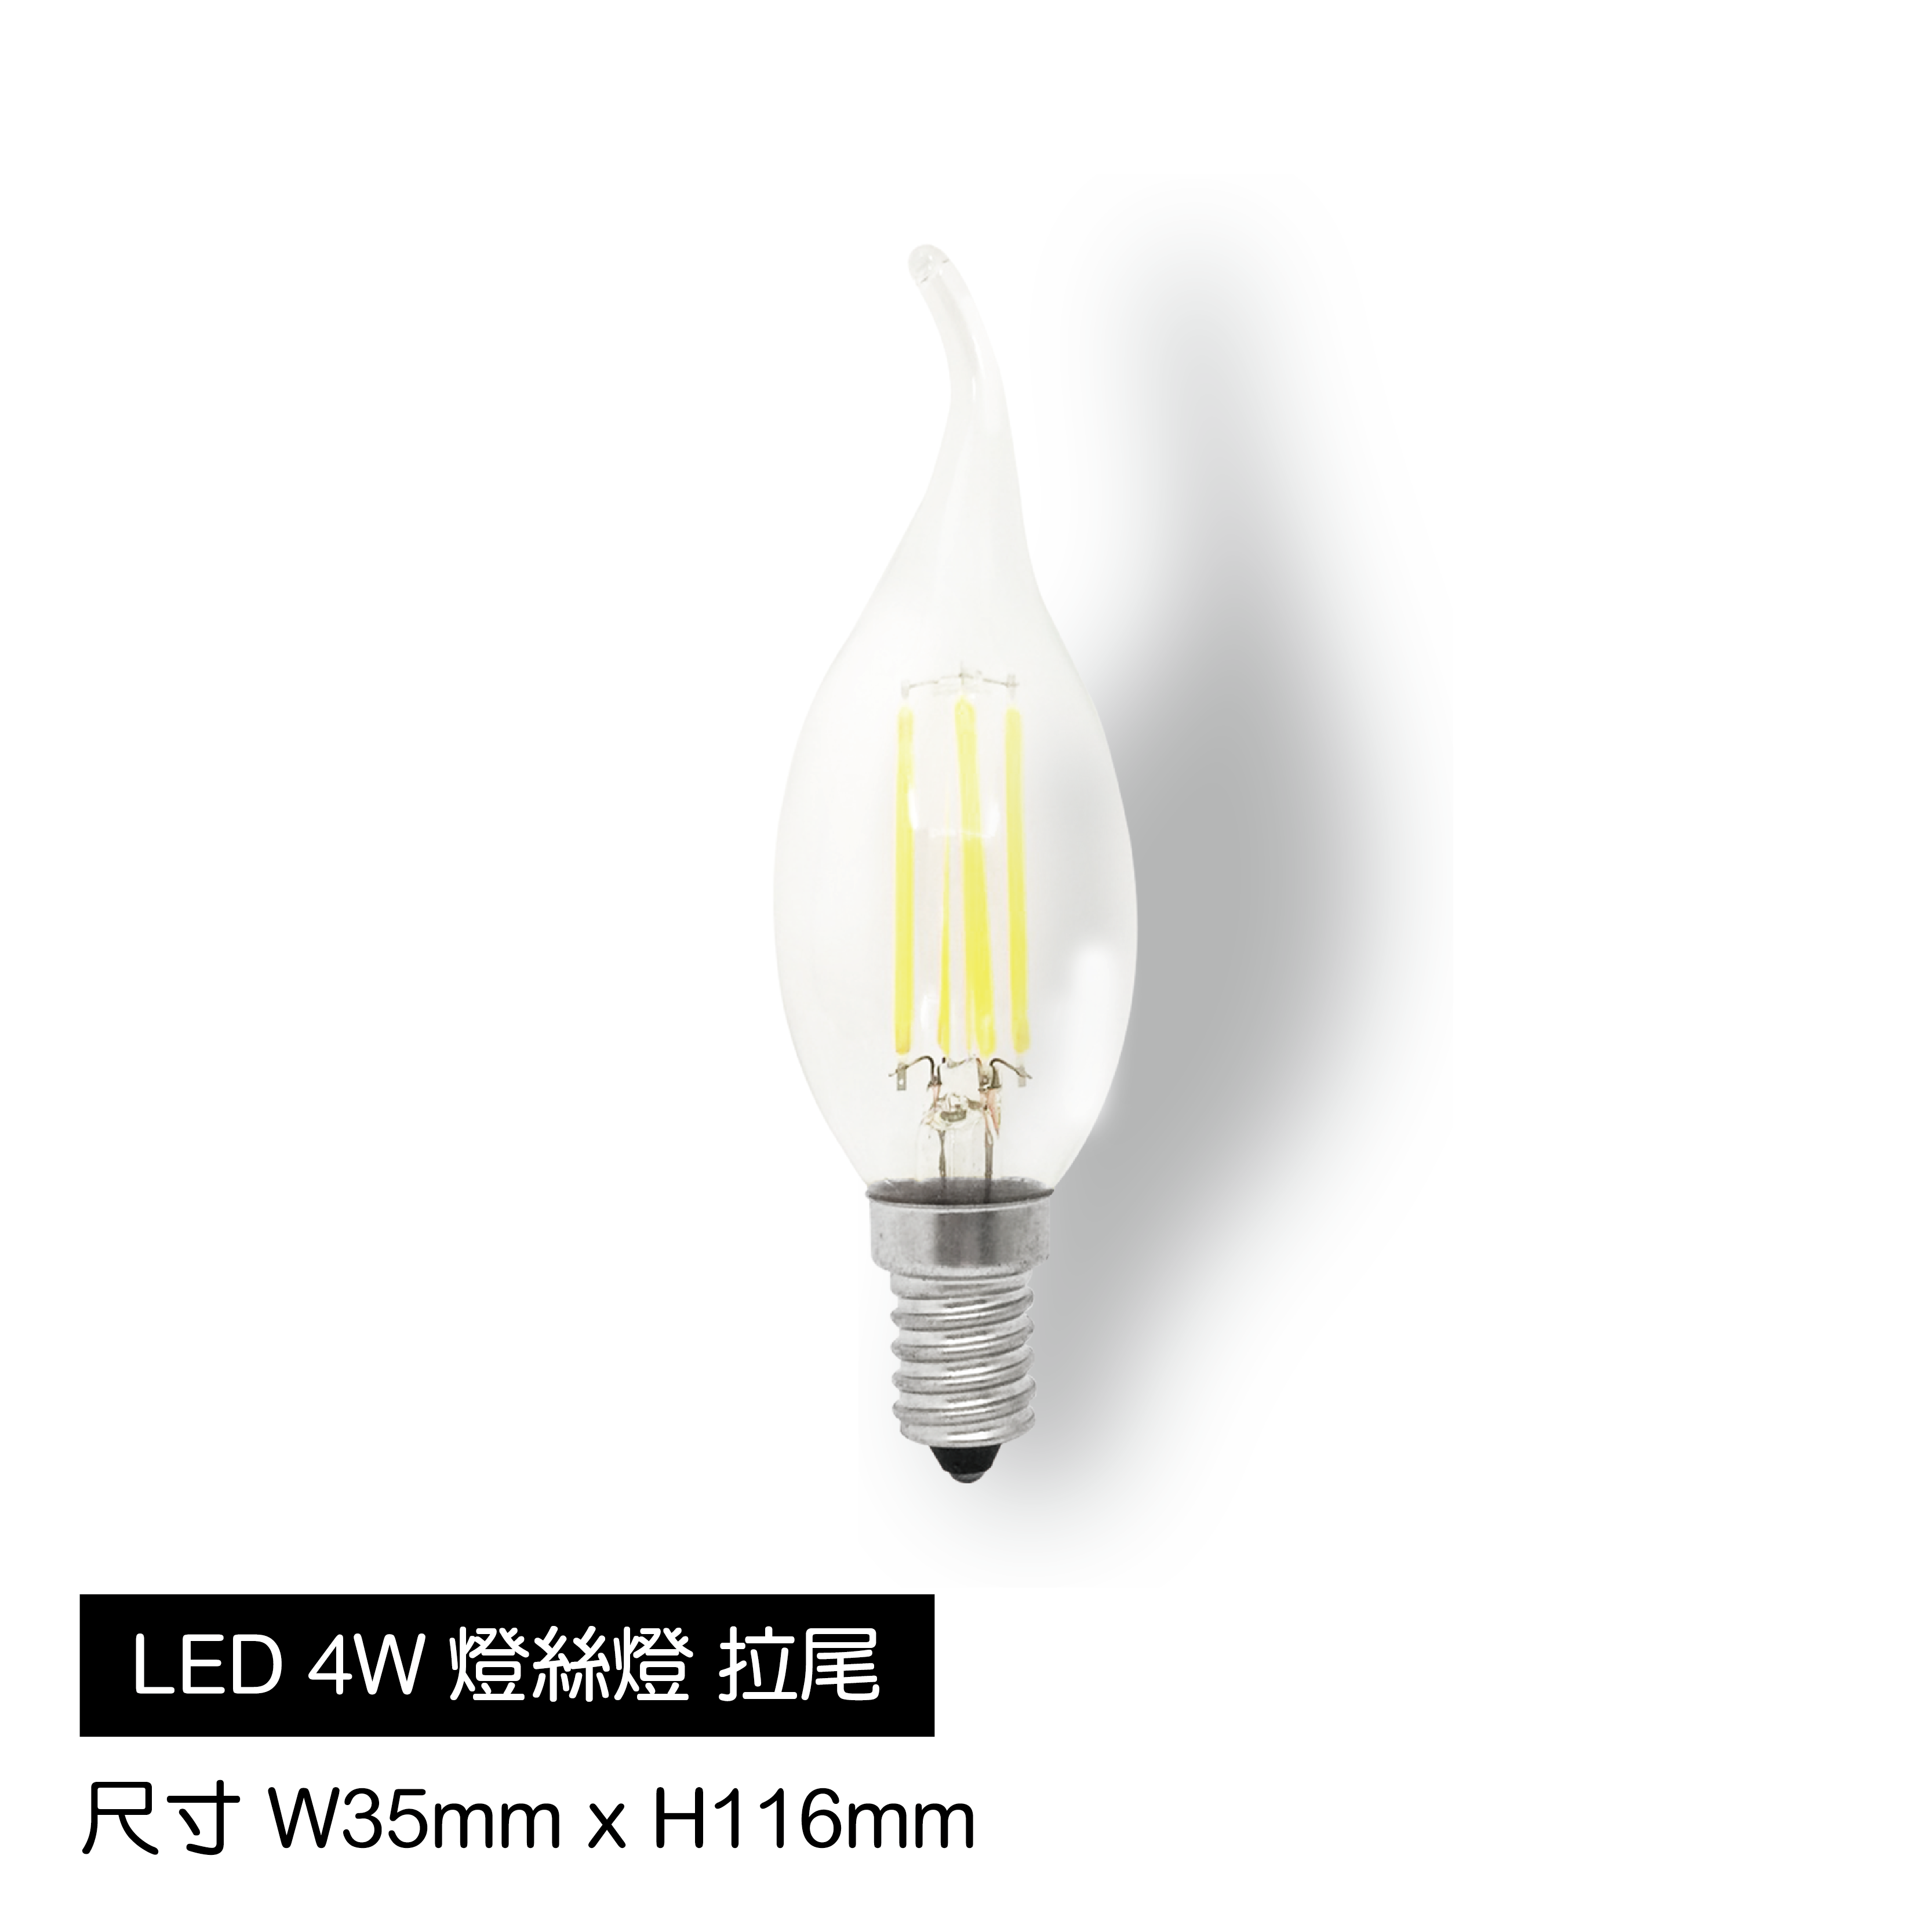 LED-4W燈絲燈[拉尾]